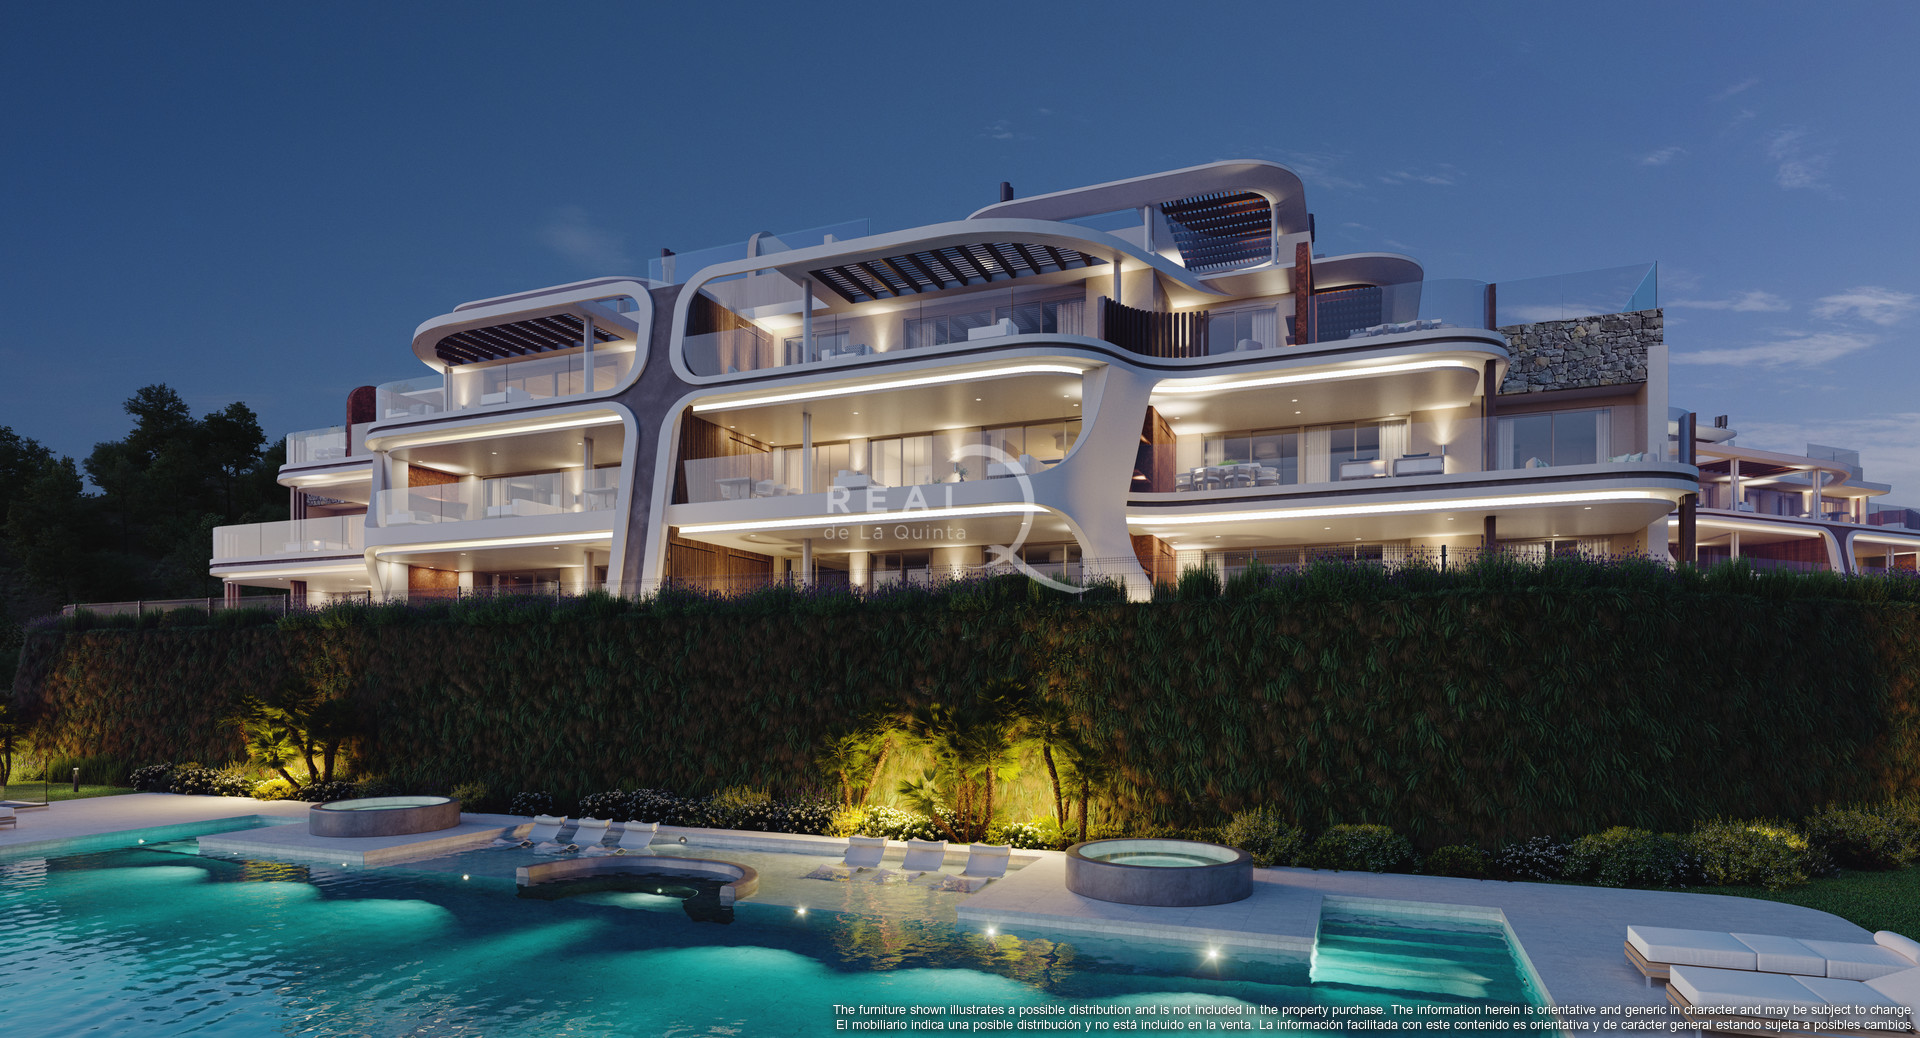 Preview image for the video "Real de La Quinta Enebros | Real Estate Project Marbella".